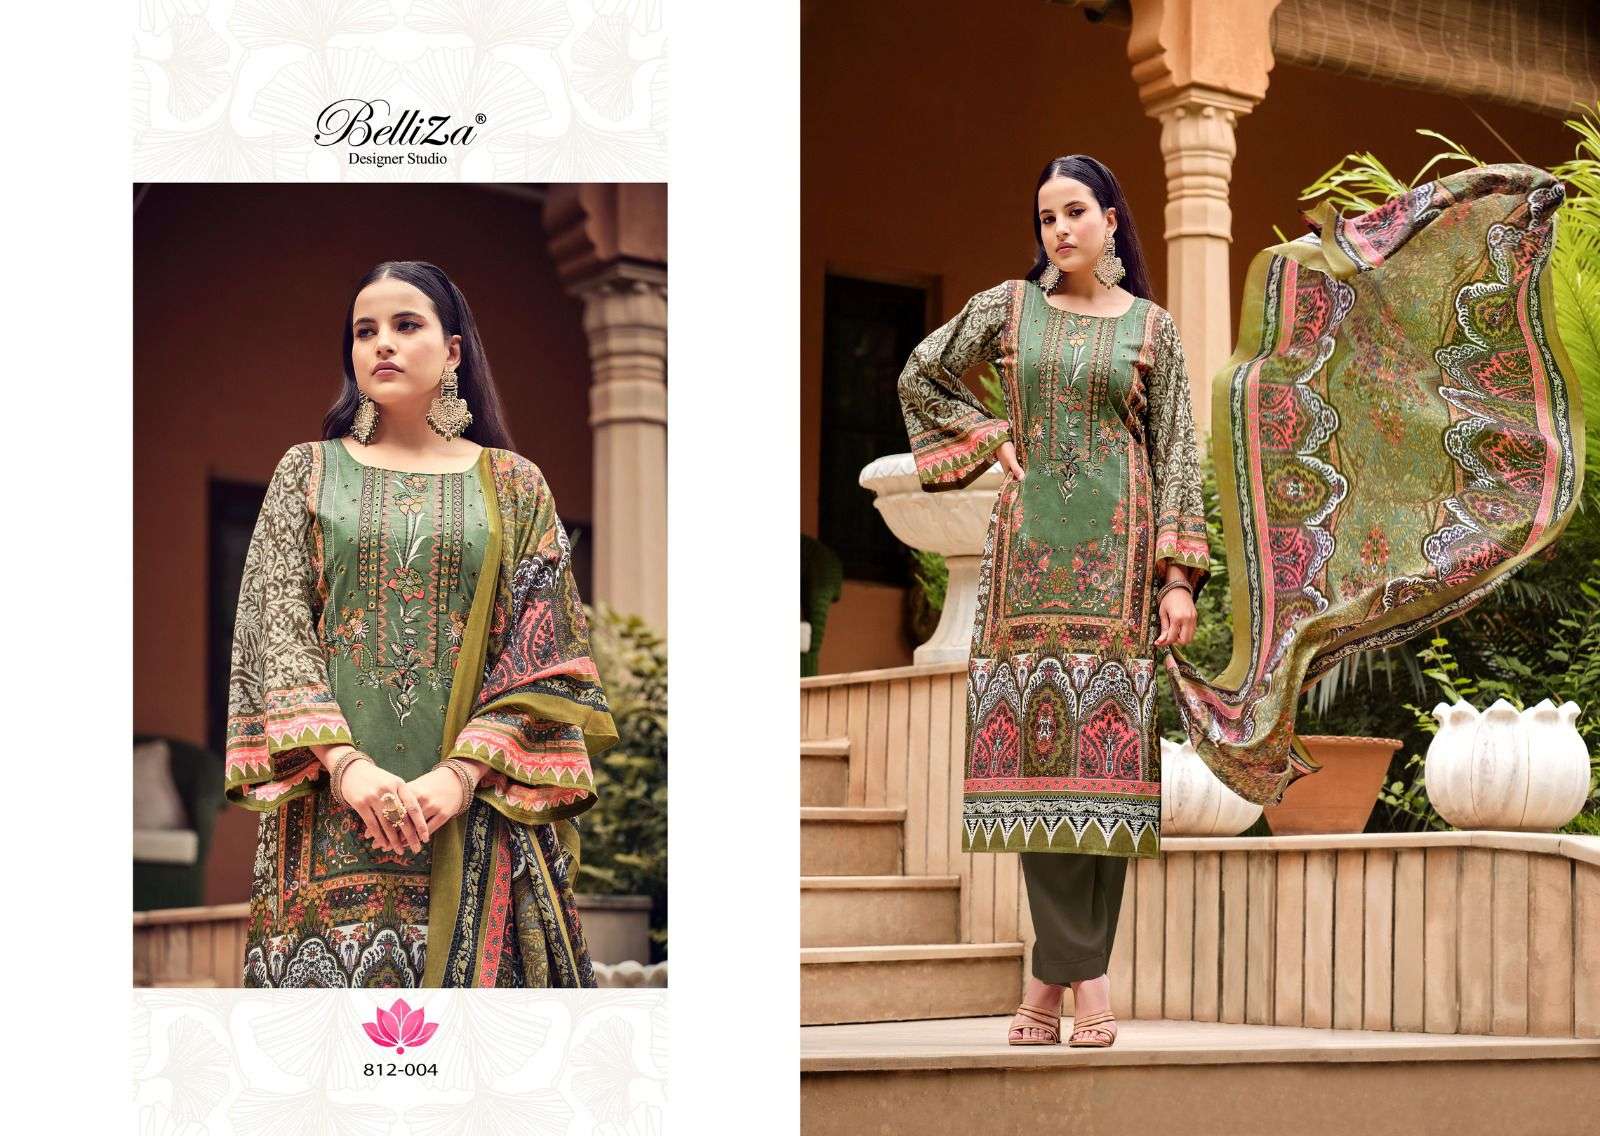 belliza designer naira vol-16 pure cotton digital printed unstich salwar suits collection surat